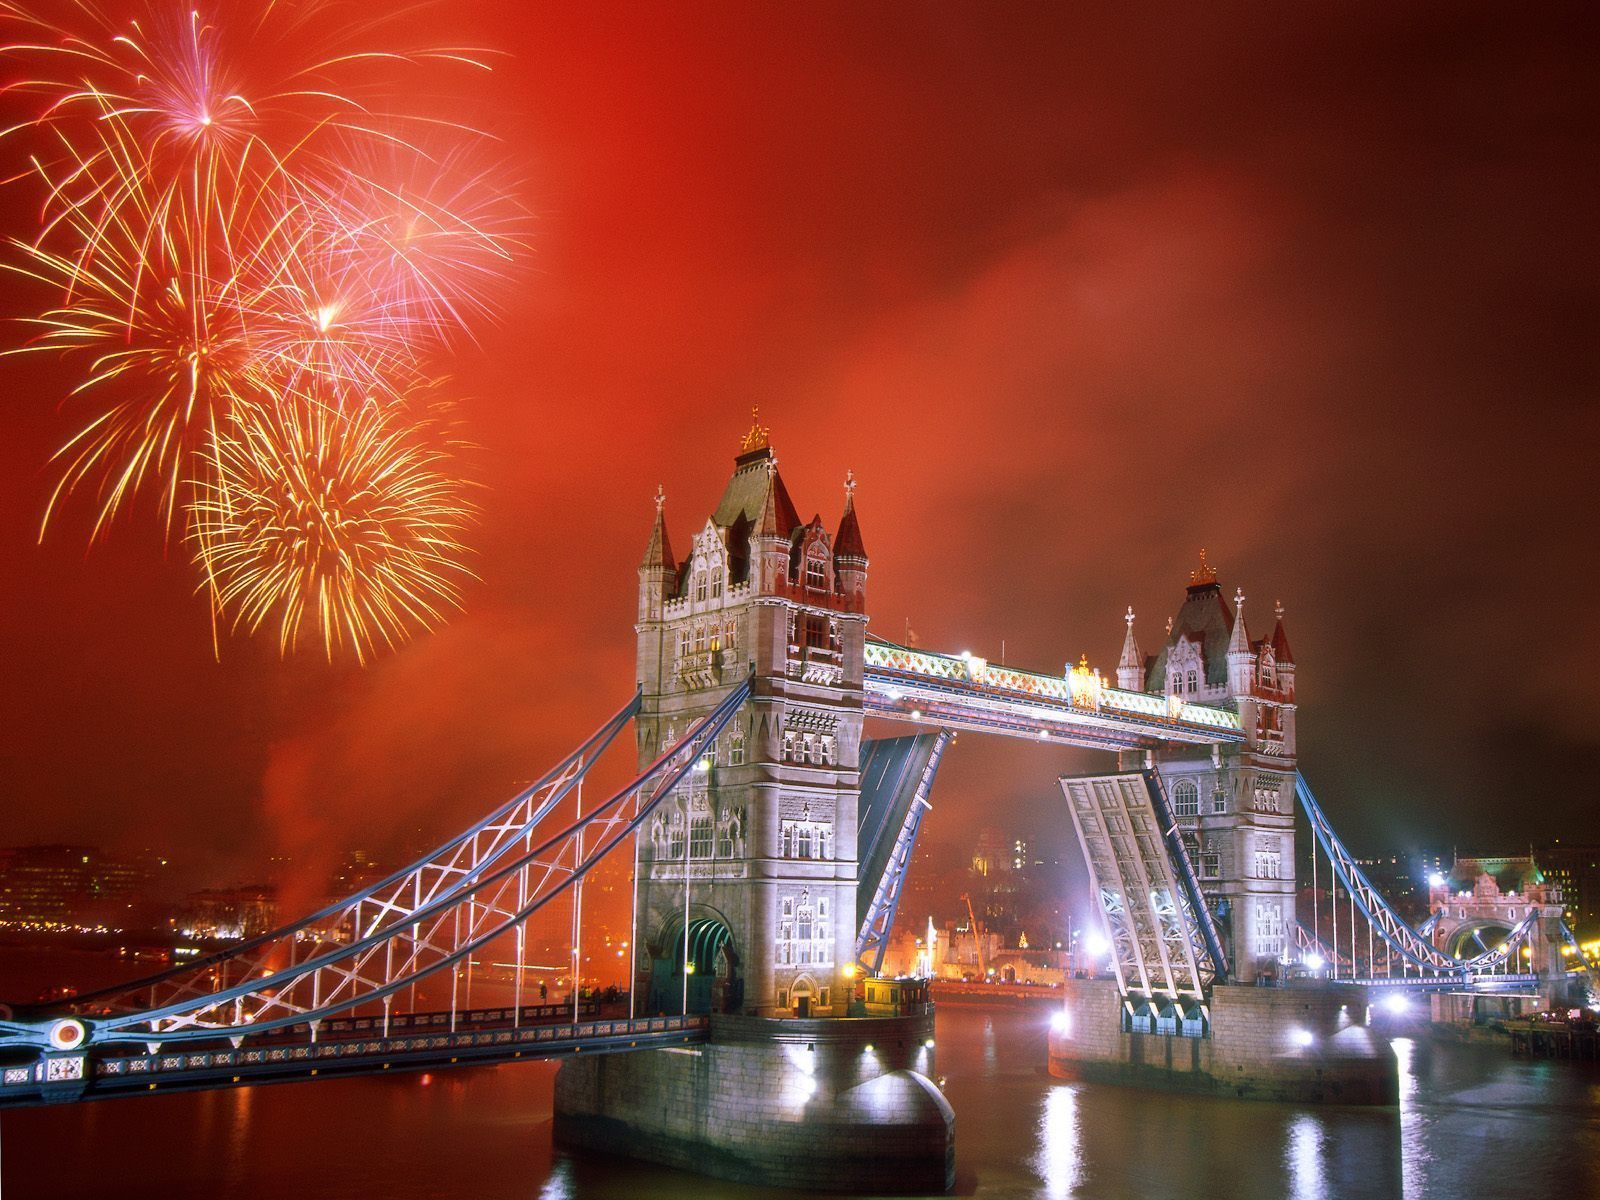 Tower Bridge at Night Wallpapers | Best Wallpapers Fan|Download ...